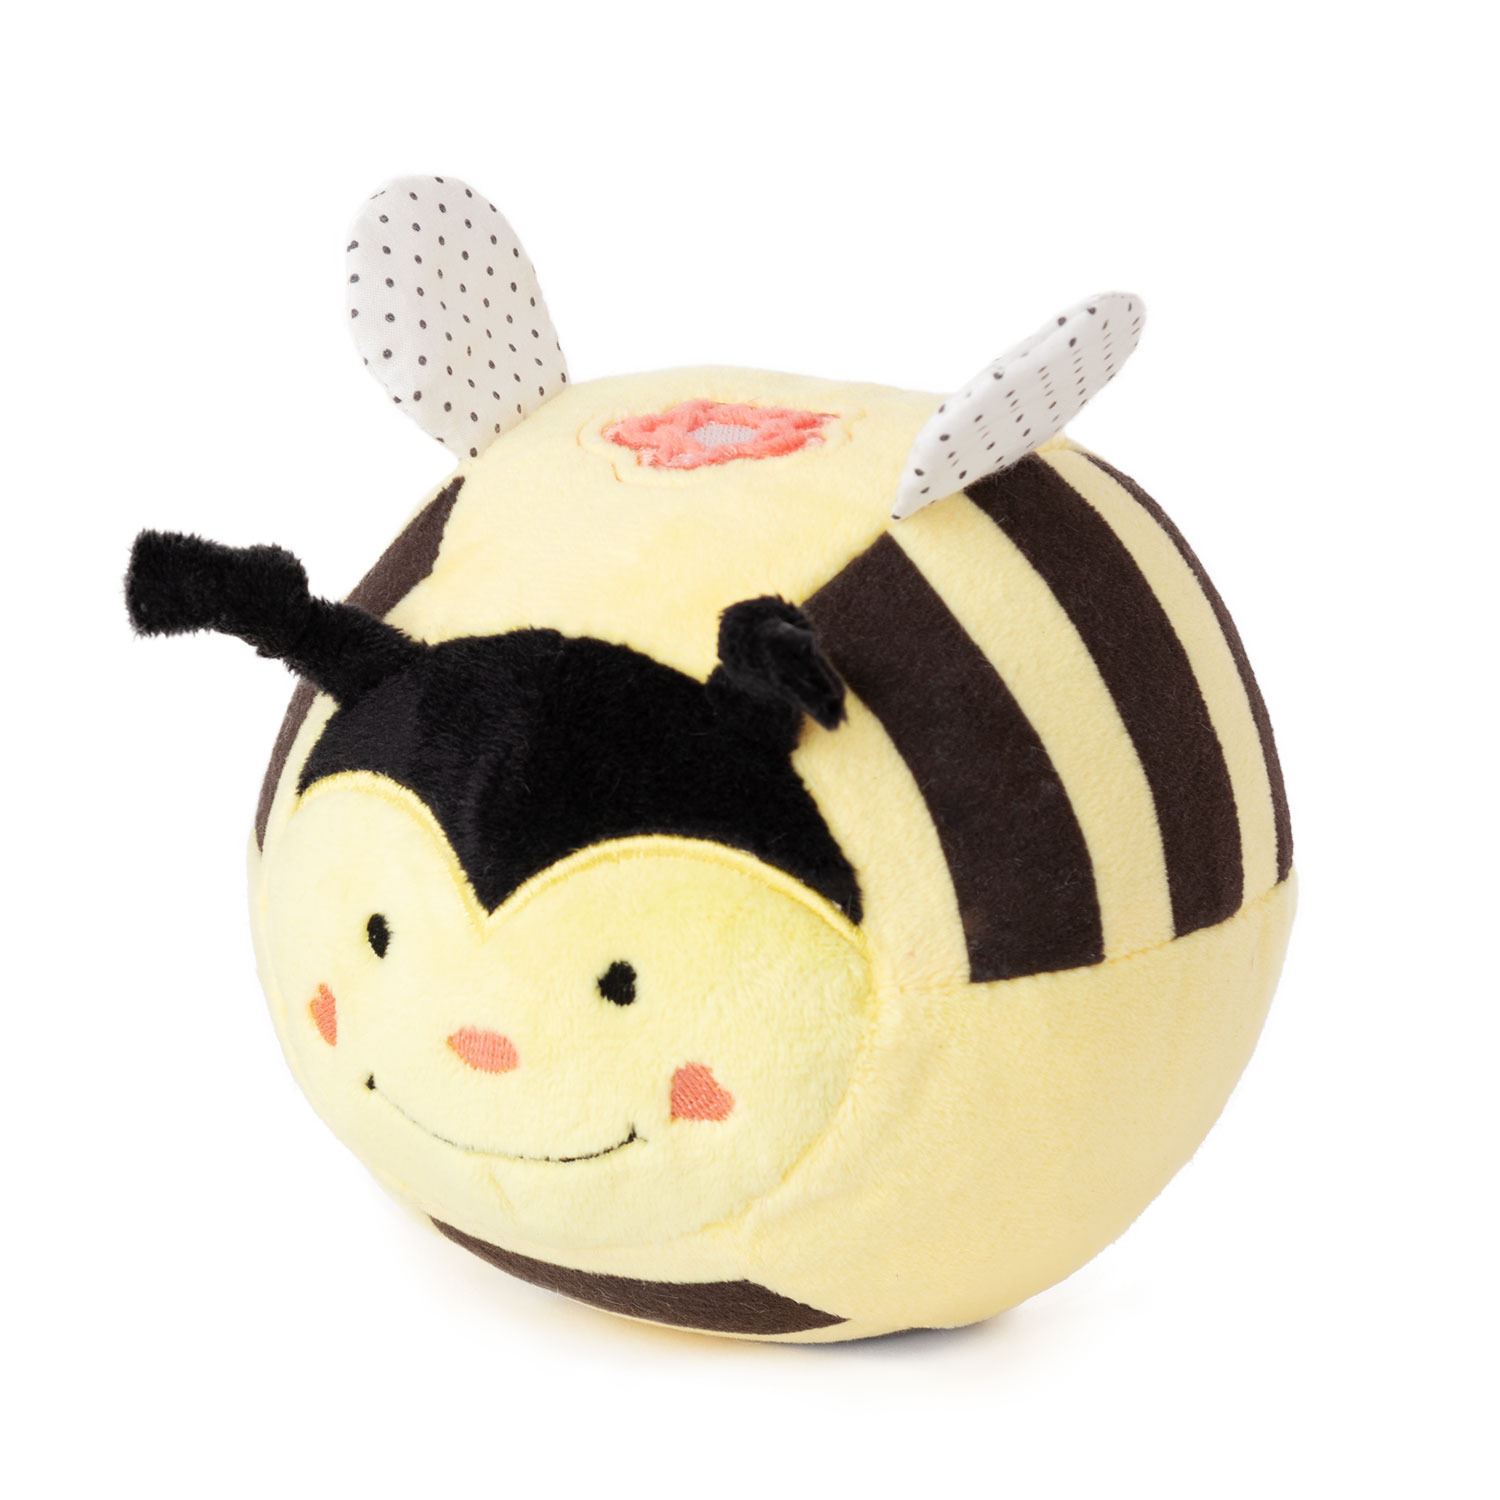 Soft baby round toy - Bee